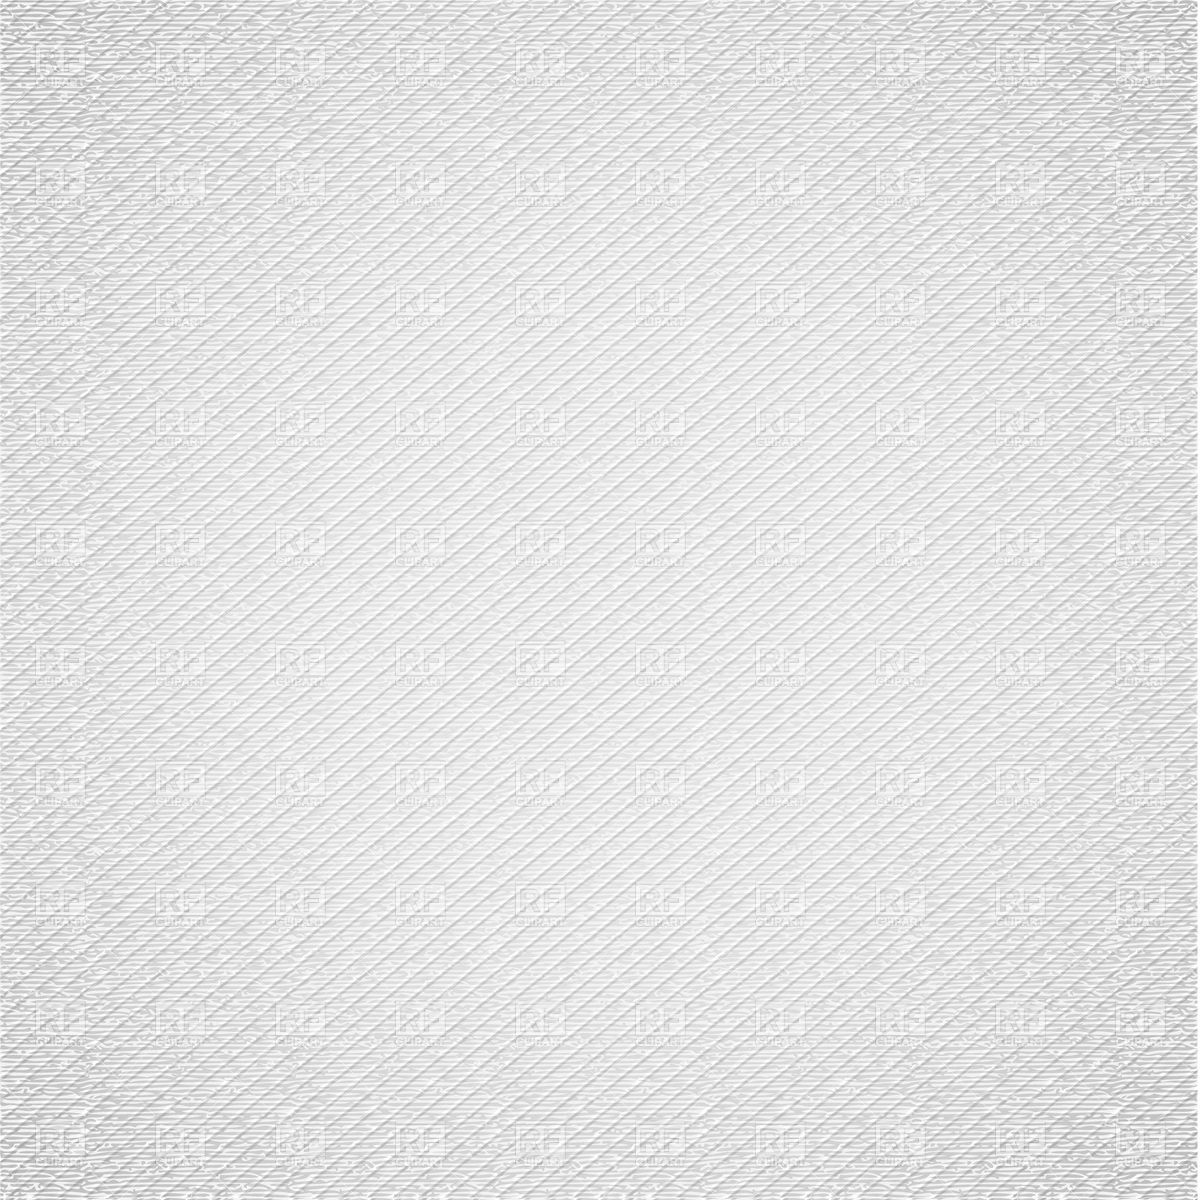 Light Grey Background Gray Striped Cardboard